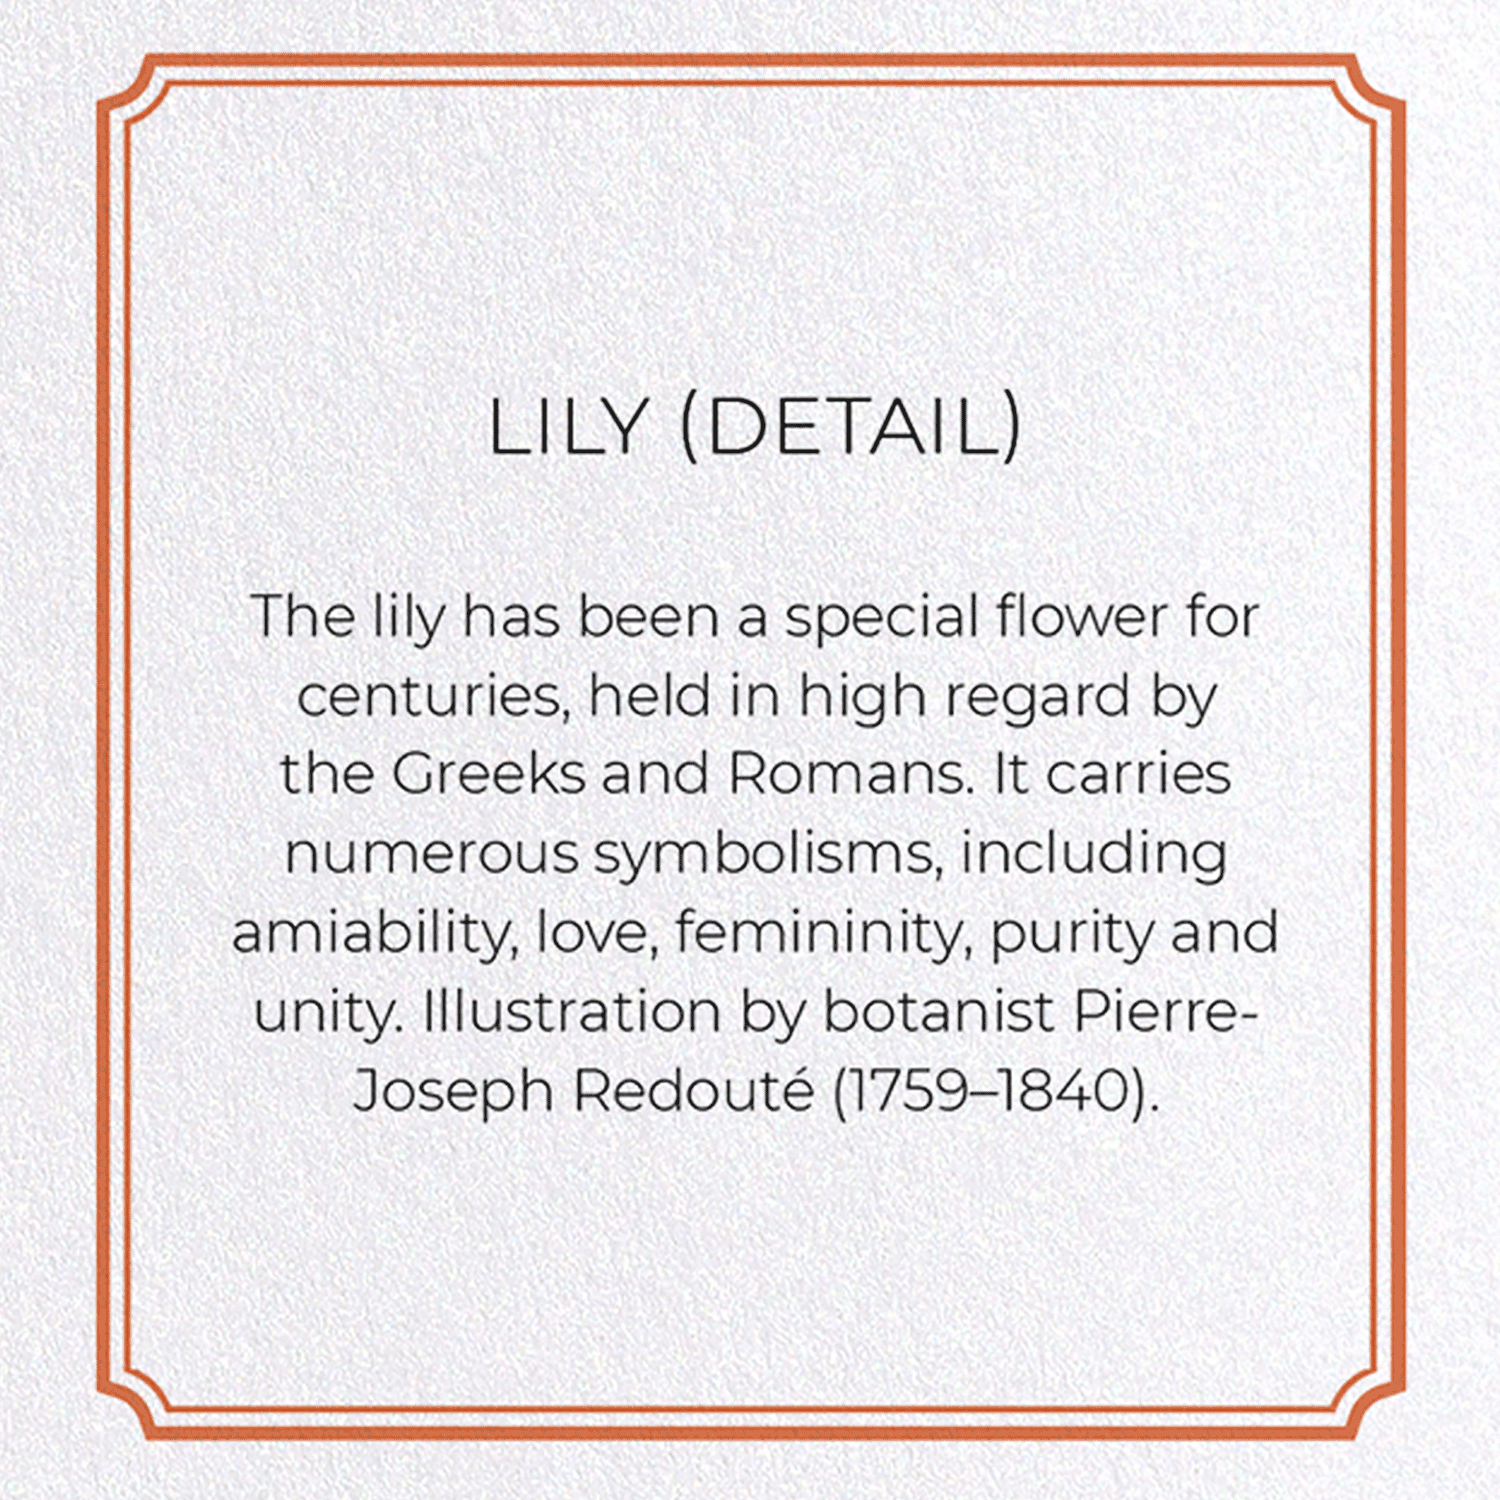 LILY: Botanical Greeting Card